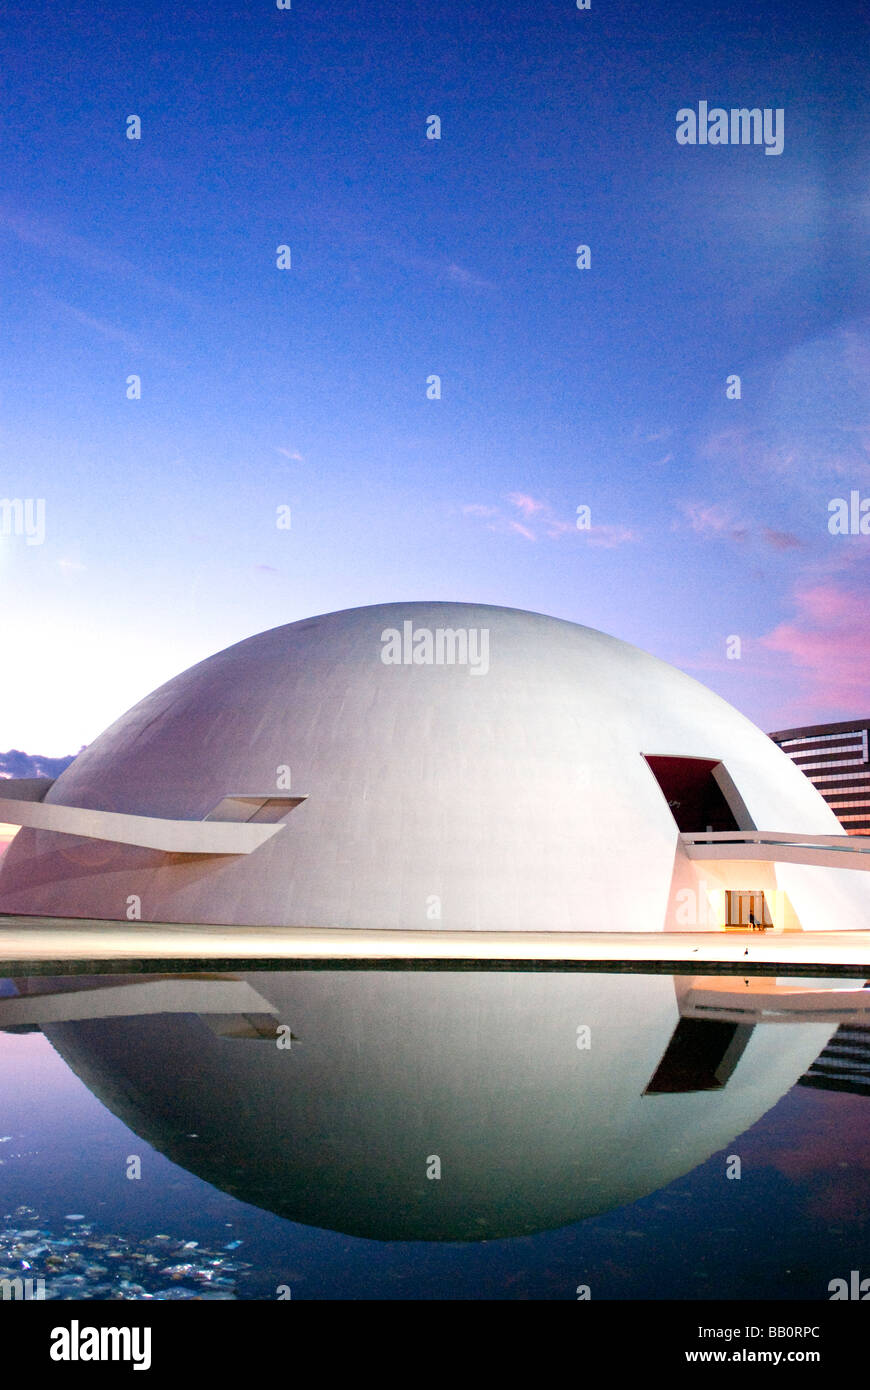 The Honestino Guimarães' National Museum building an example of Oscar Niemeyer's architecture in Brasília, Brazil Stock Photo